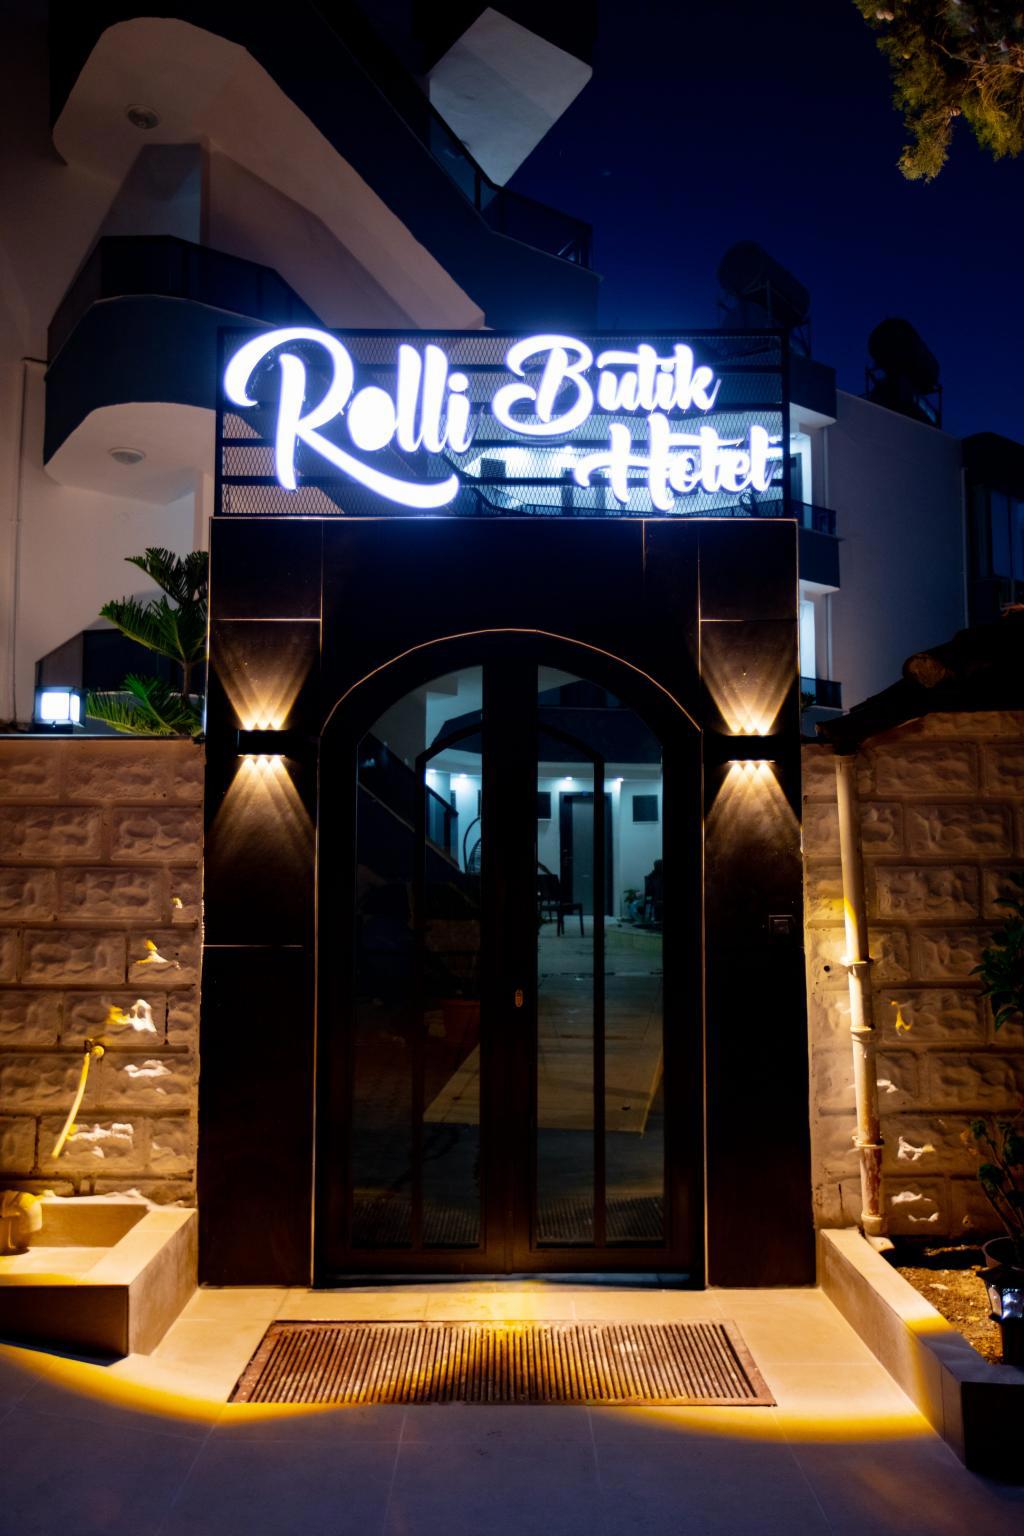 Rolli Butik Hotel